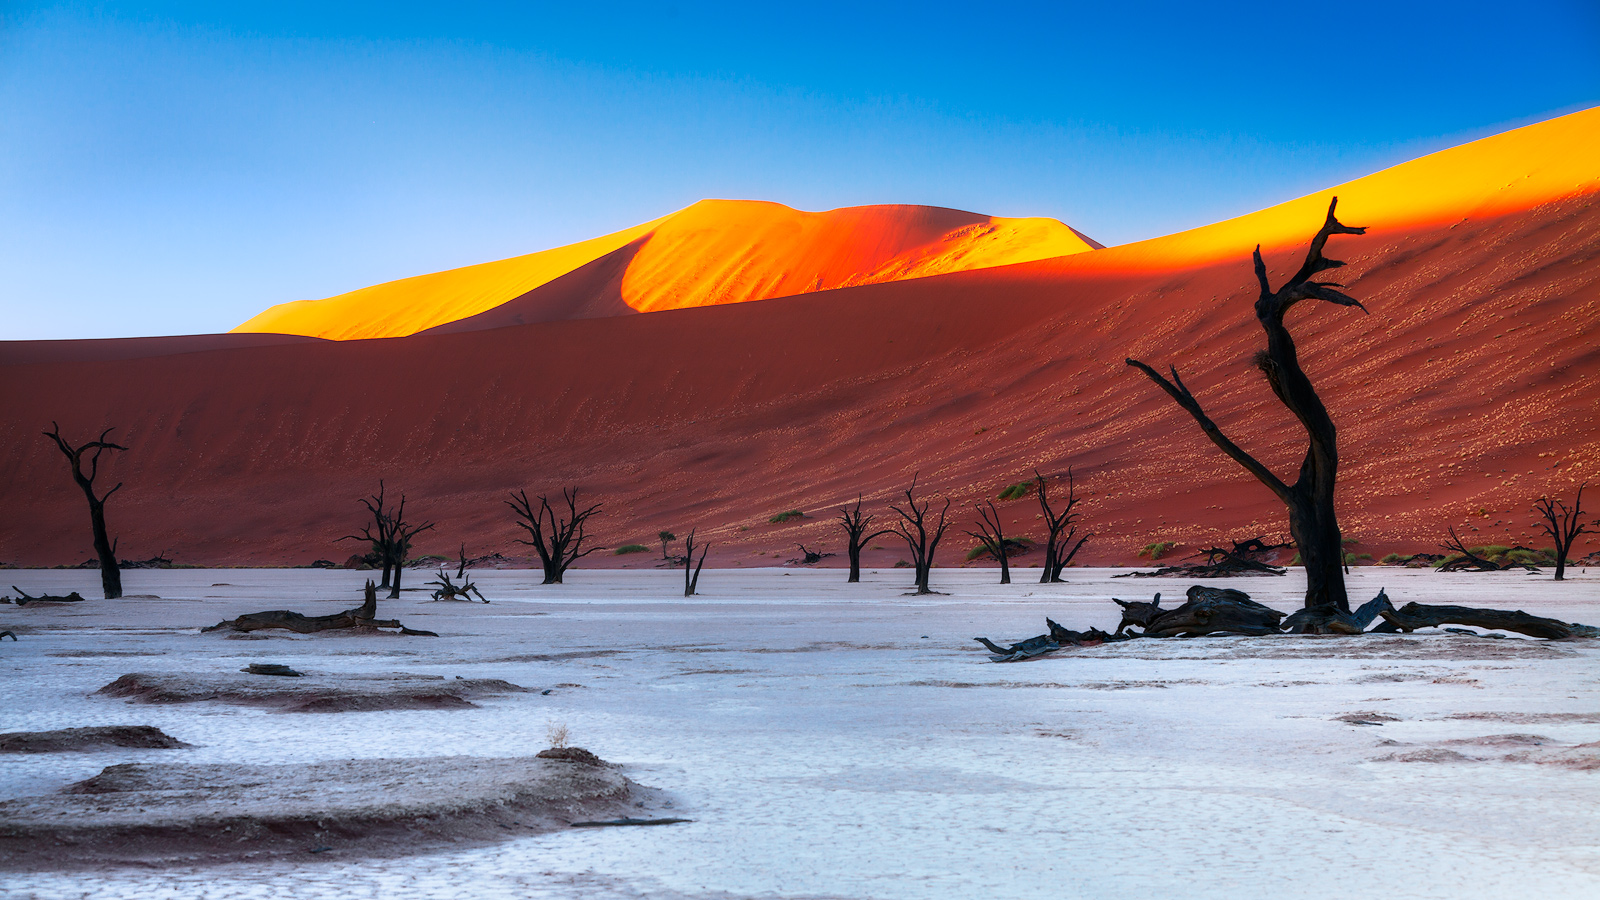 Morning light touches the peaks of the orange dunes above Deadvlei